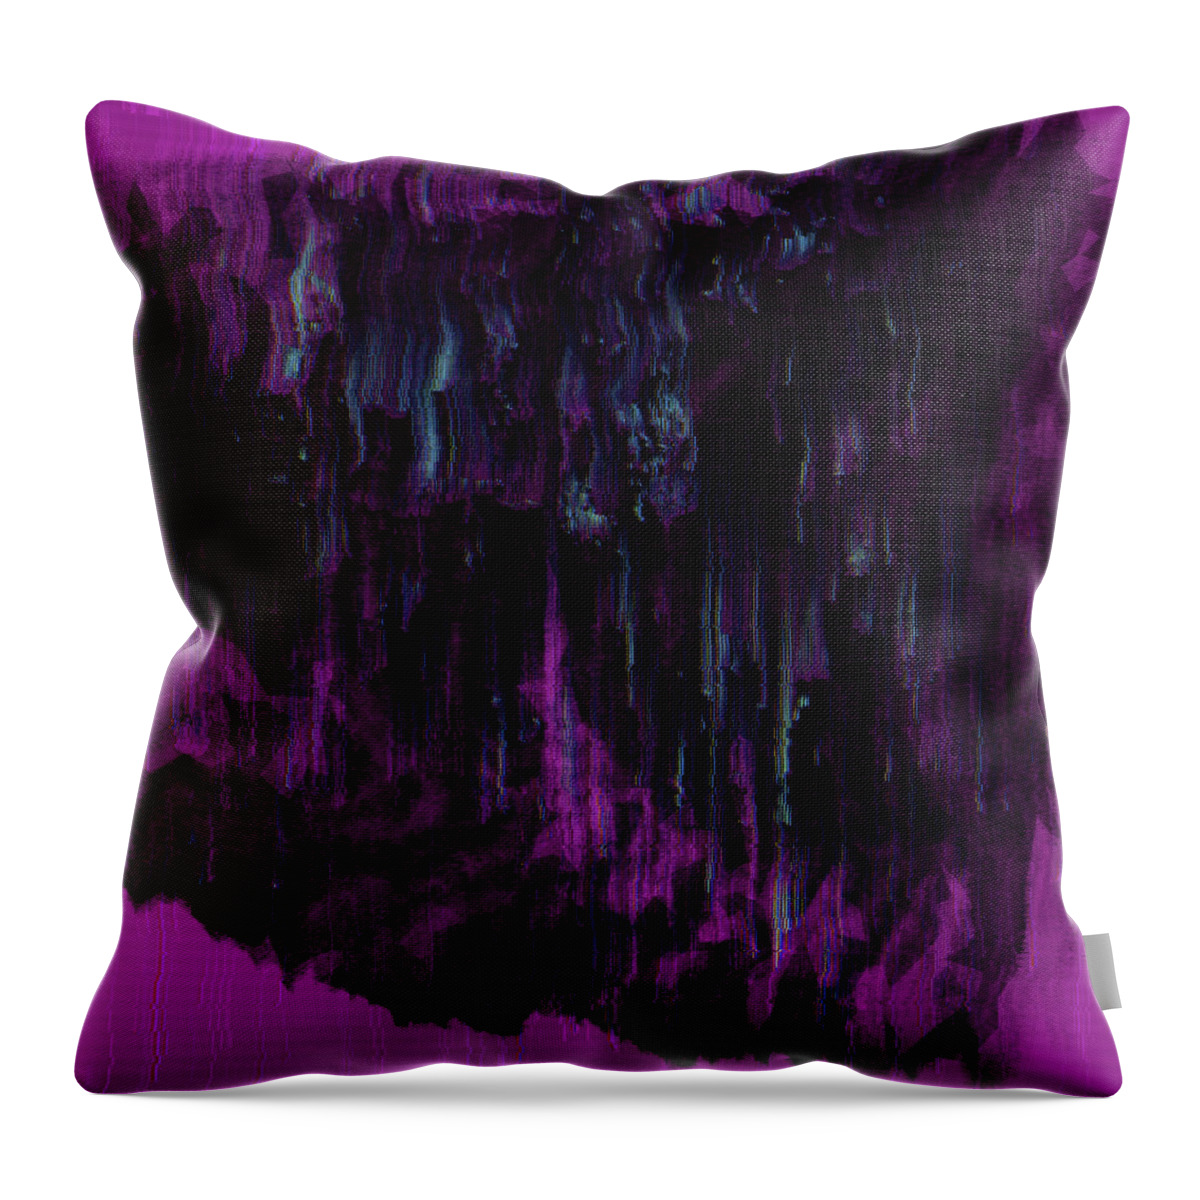 Glitch Throw Pillow featuring the digital art Fever Dream by Jennifer Walsh